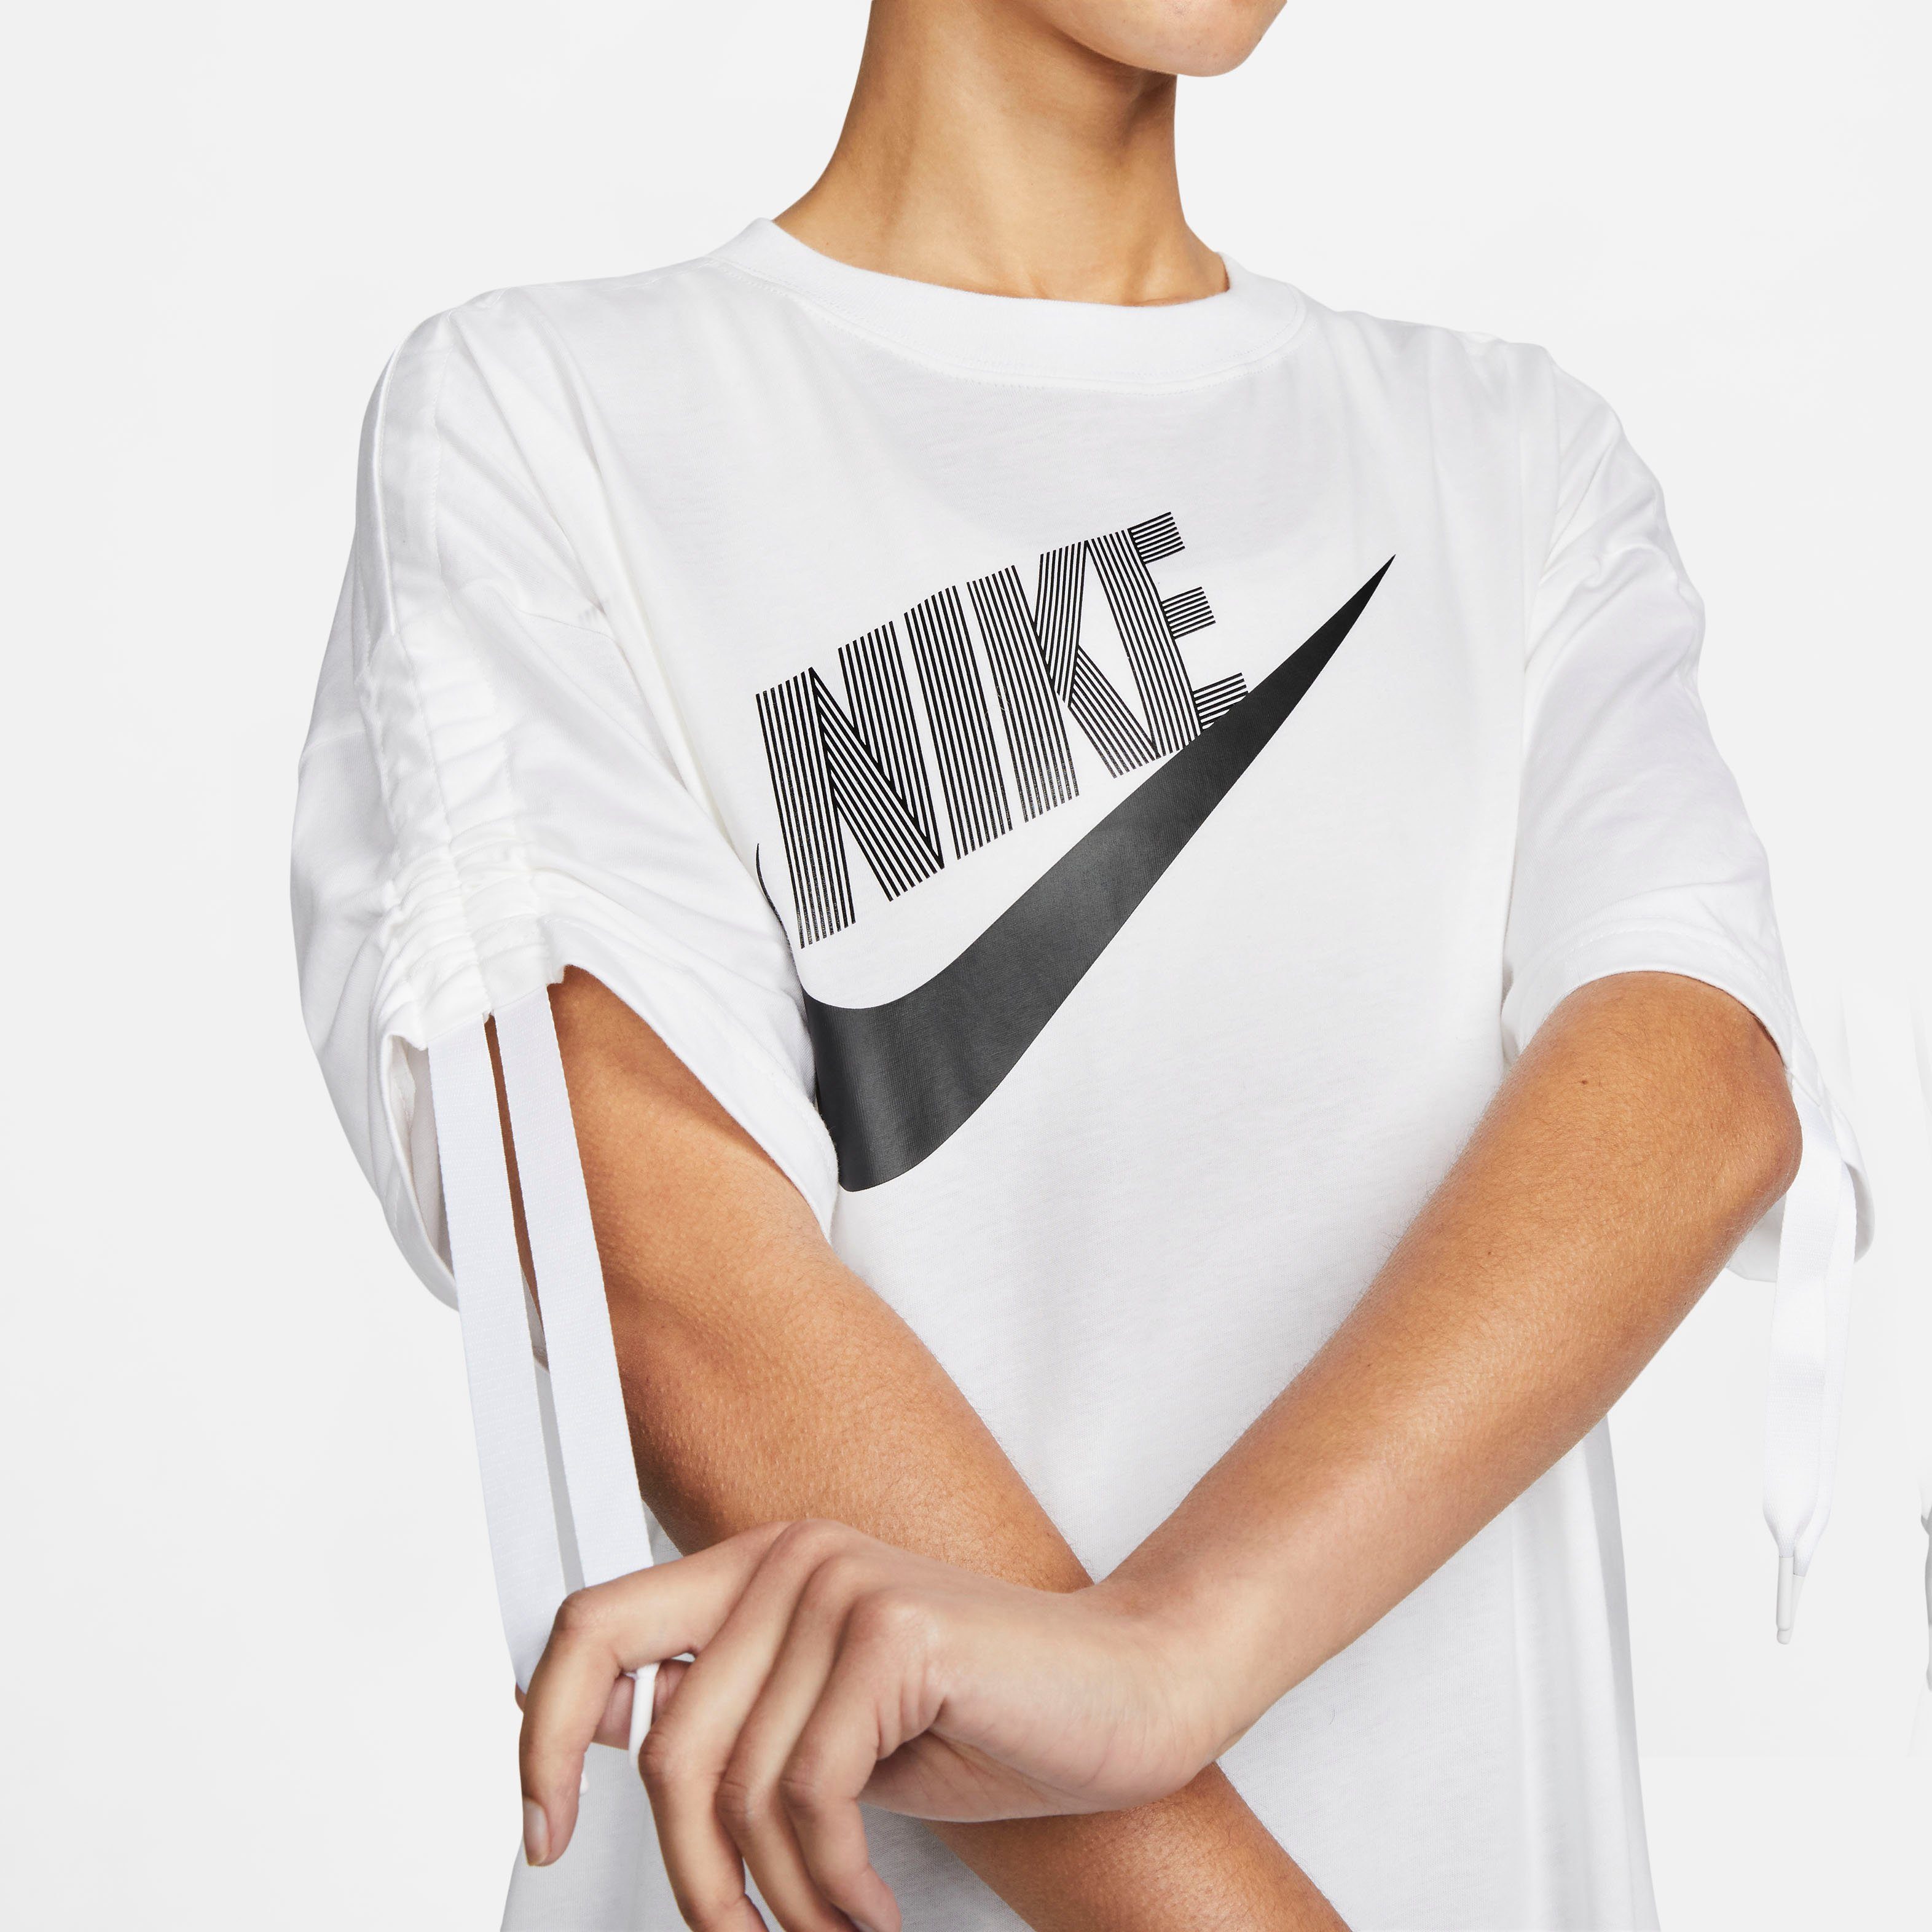 WHITE W NSW Nike DNC SS TOP Sportswear T-Shirt